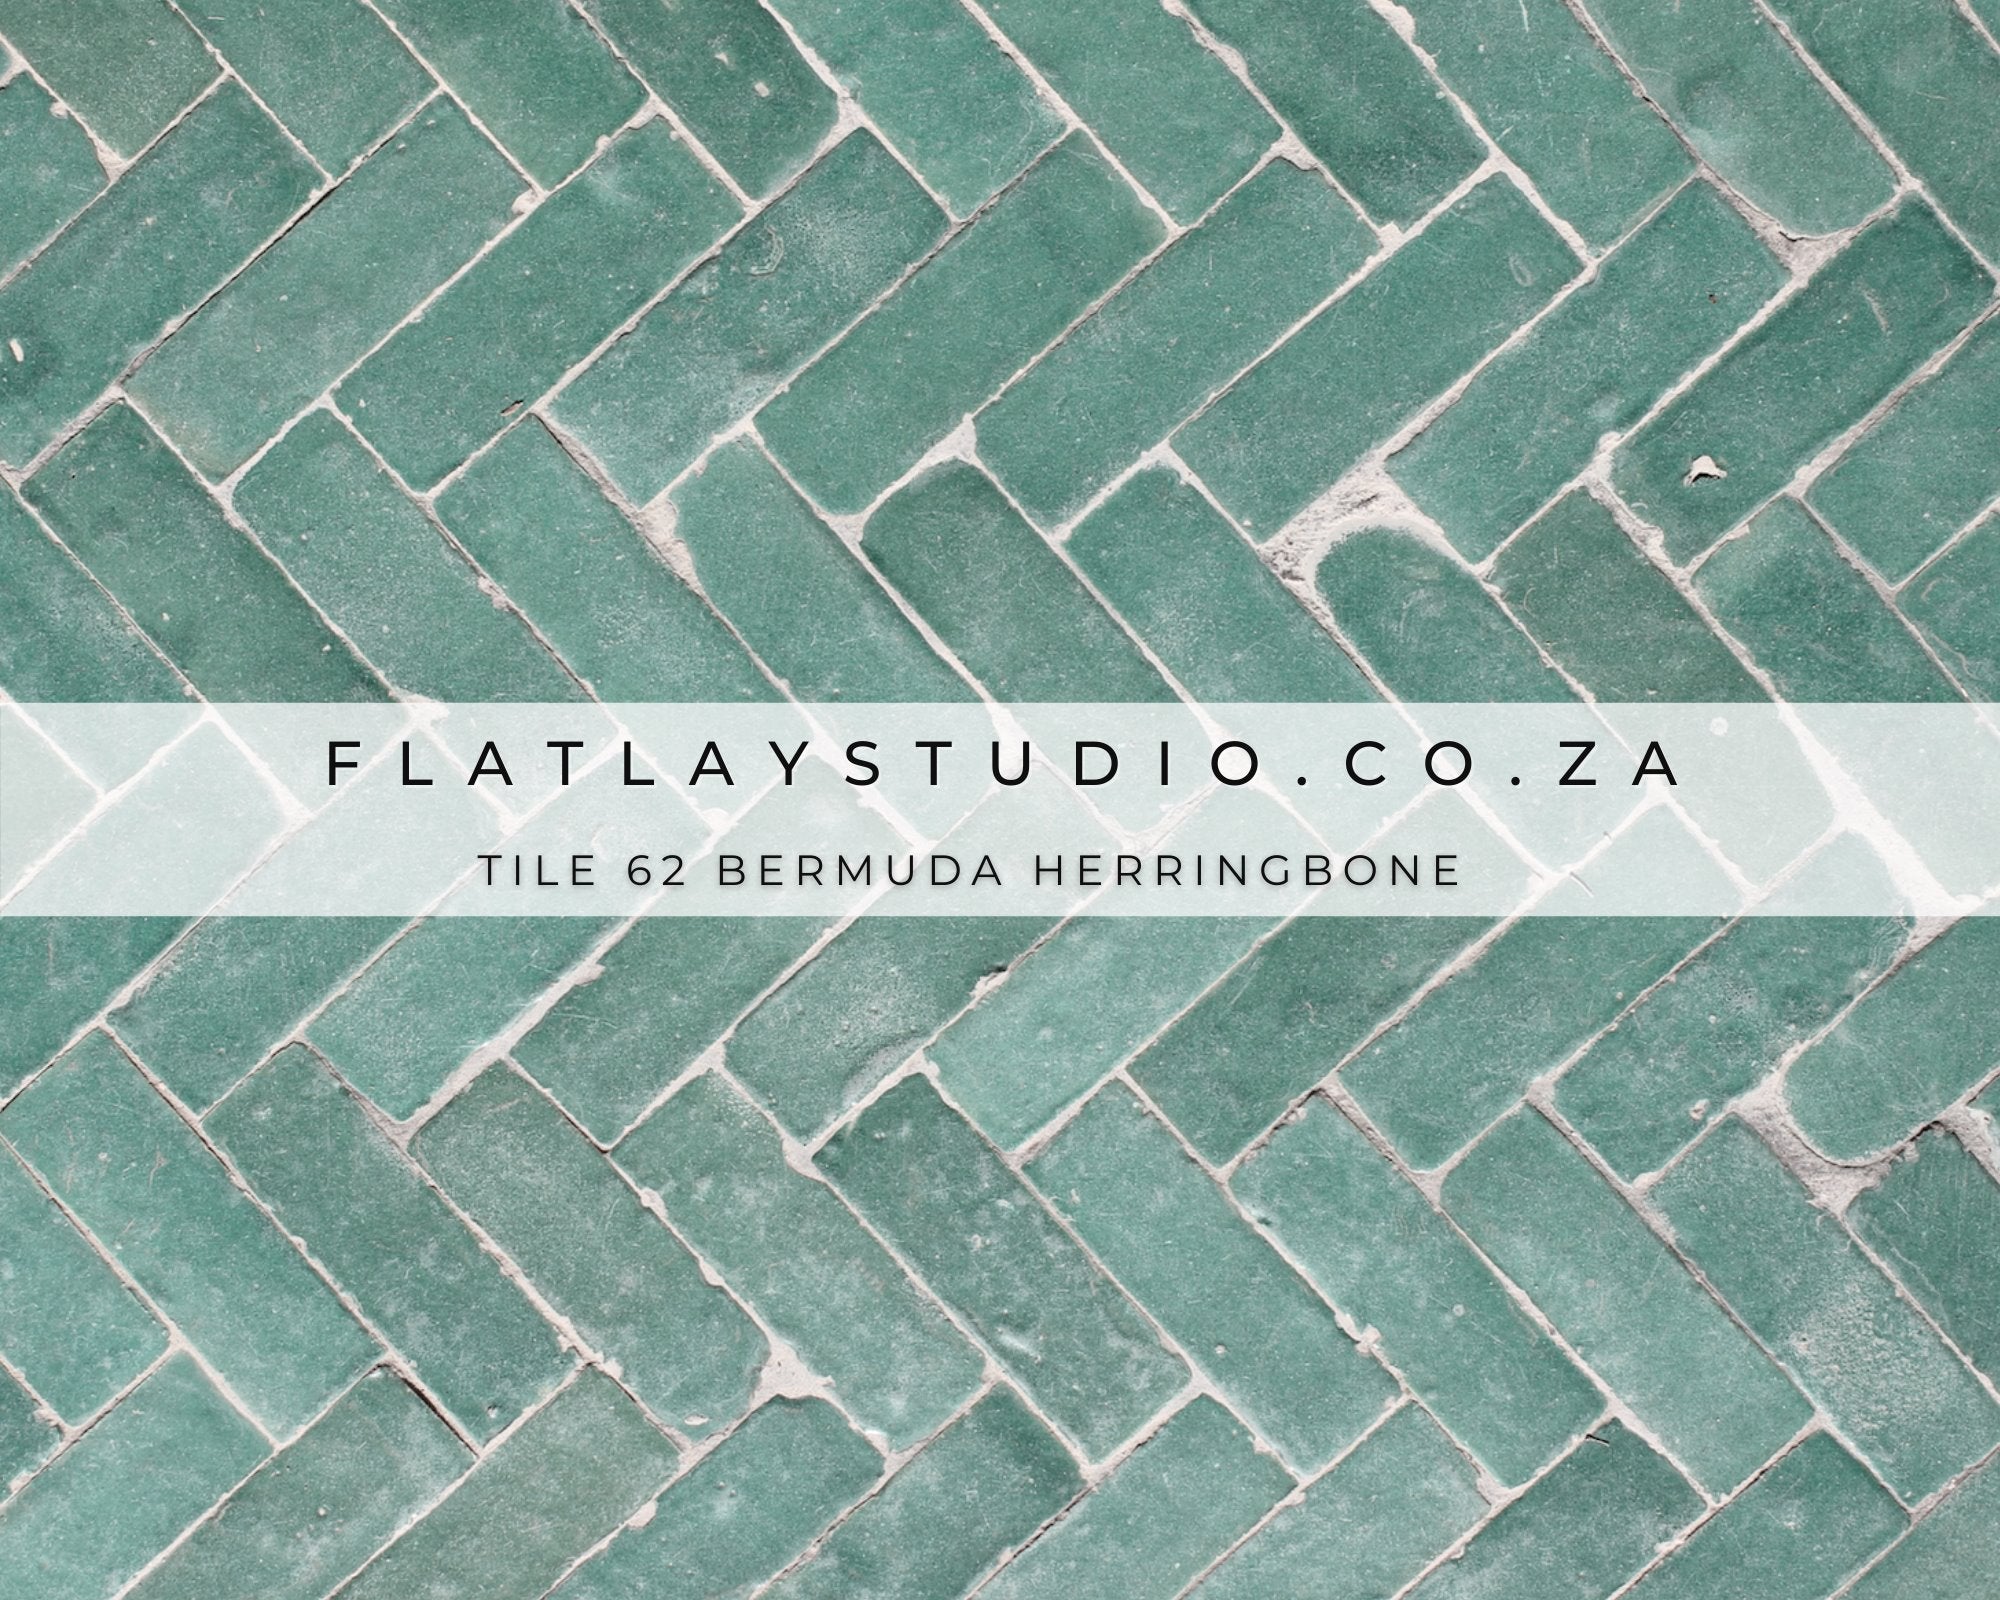 Tile 62 Bermuda Herringbone - FlatlayStudio Flatlay Styling Board